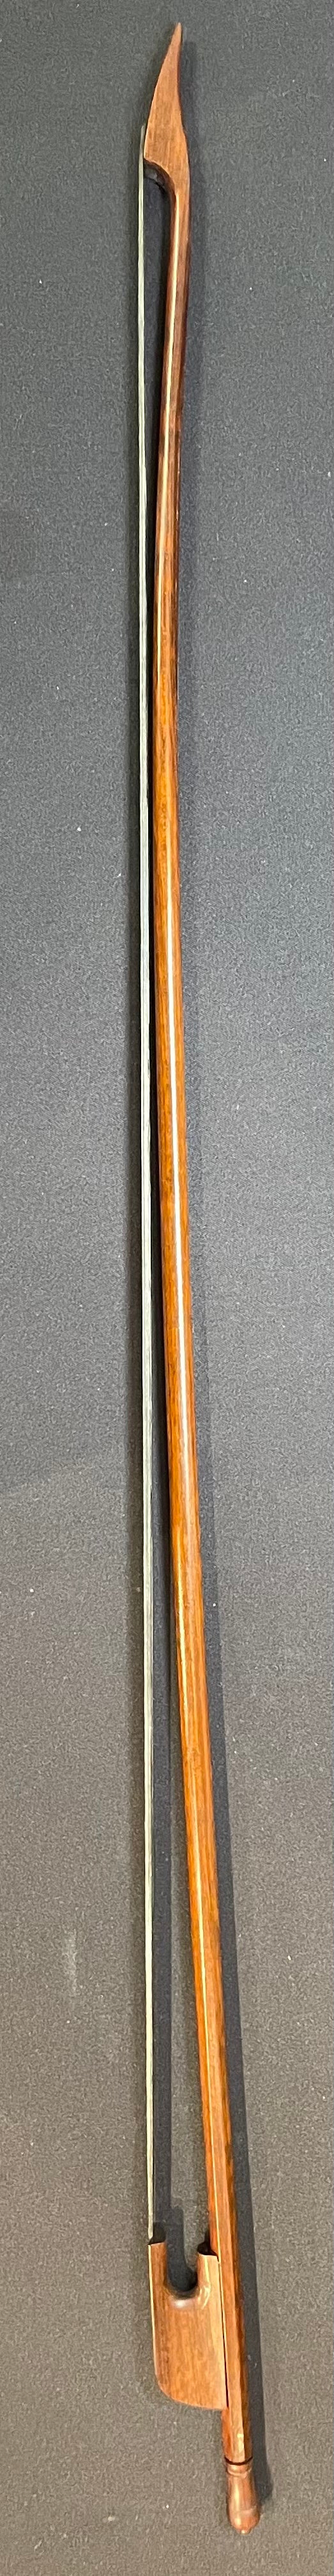 Full Size Viola Bow - Baroque 004 Model